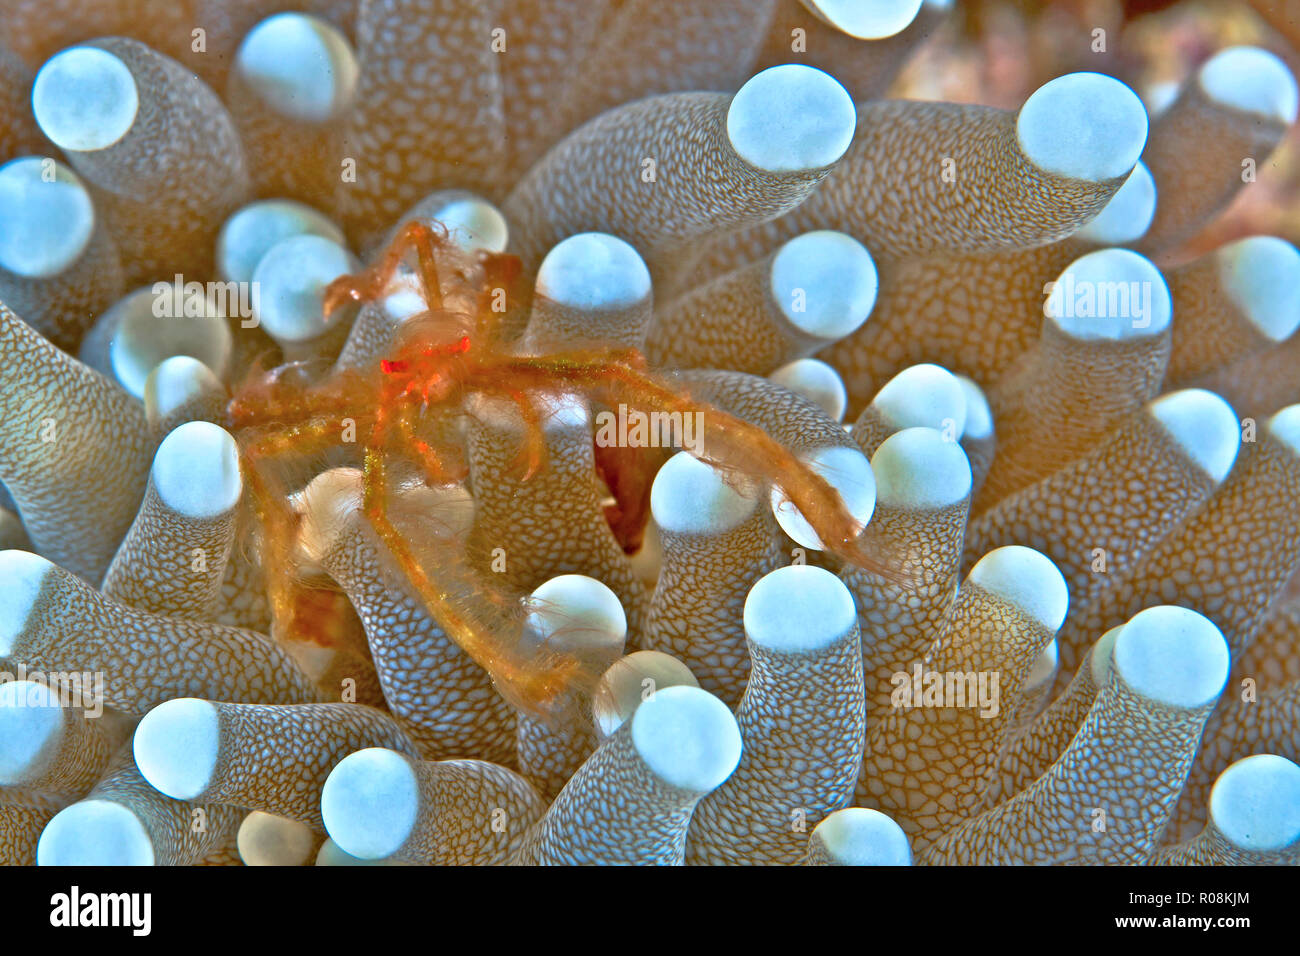 Orang Utan Krabbe in Tentakeln der mushroom Coral eingebettet. Puerto Galera, Philippinen. November 2010 Stockfoto